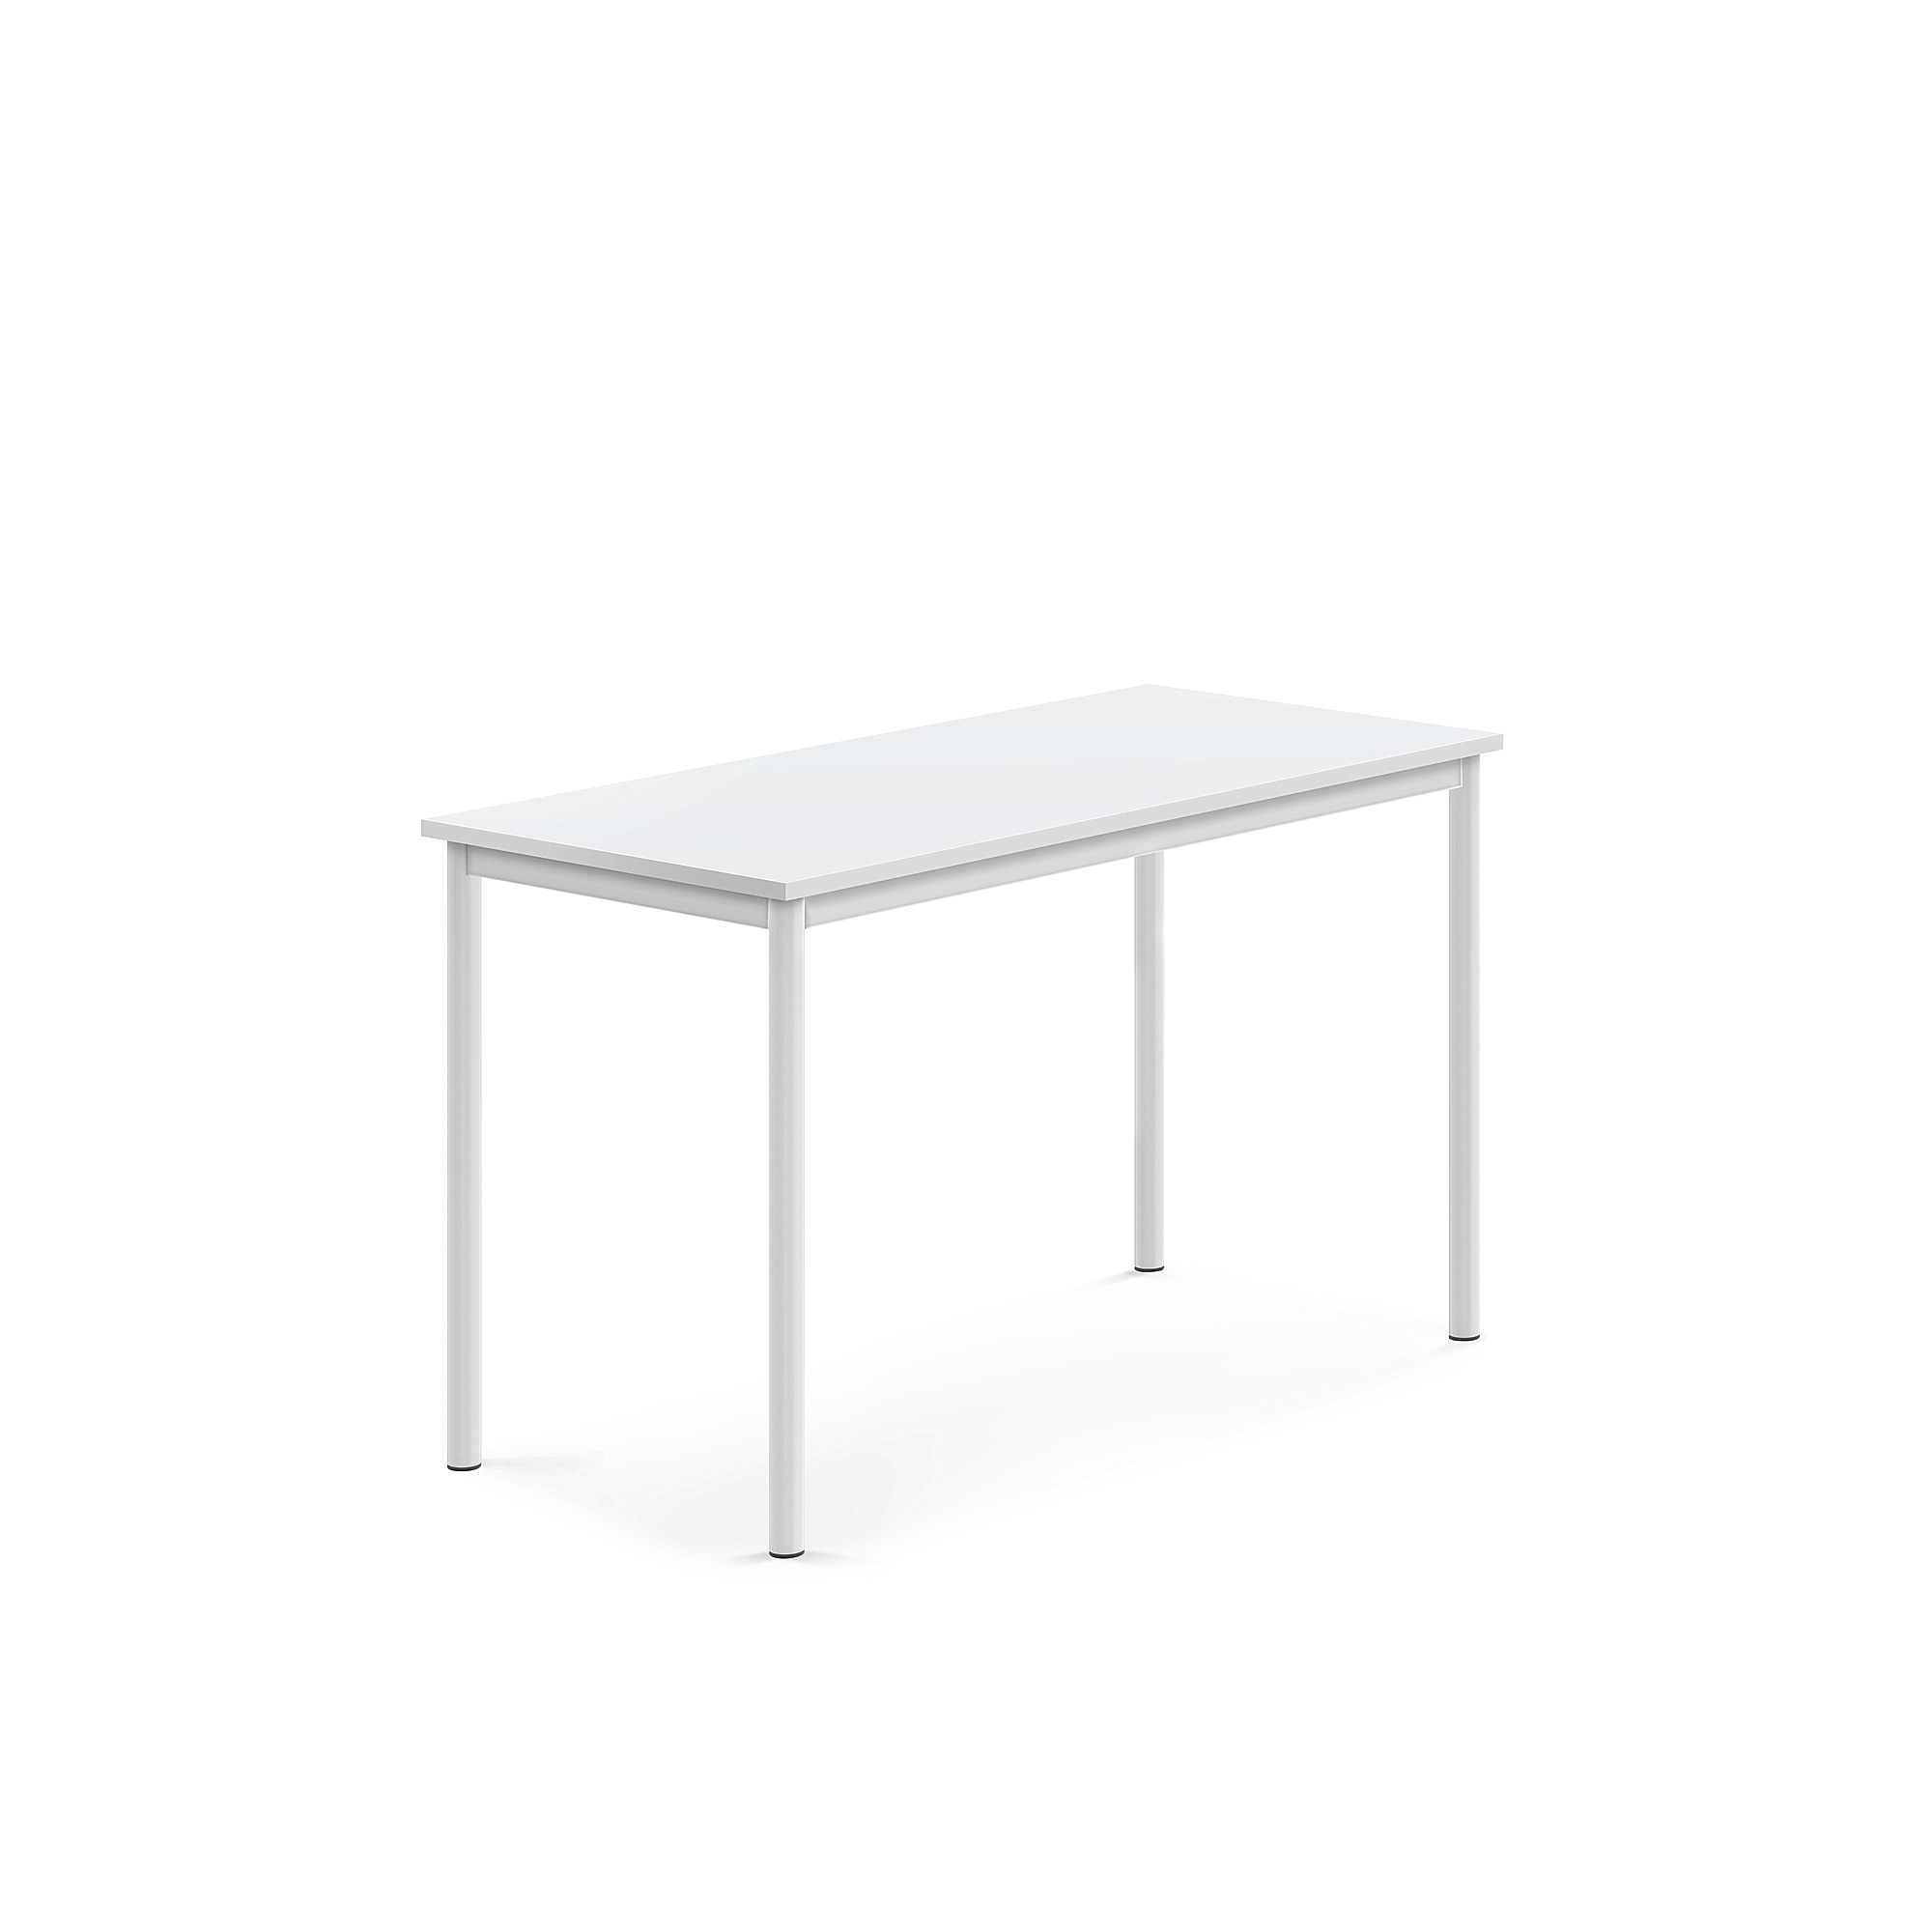 Stůl SONITUS, 1200x600x720 mm, bílé nohy, HPL deska tlumící hluk, bílá